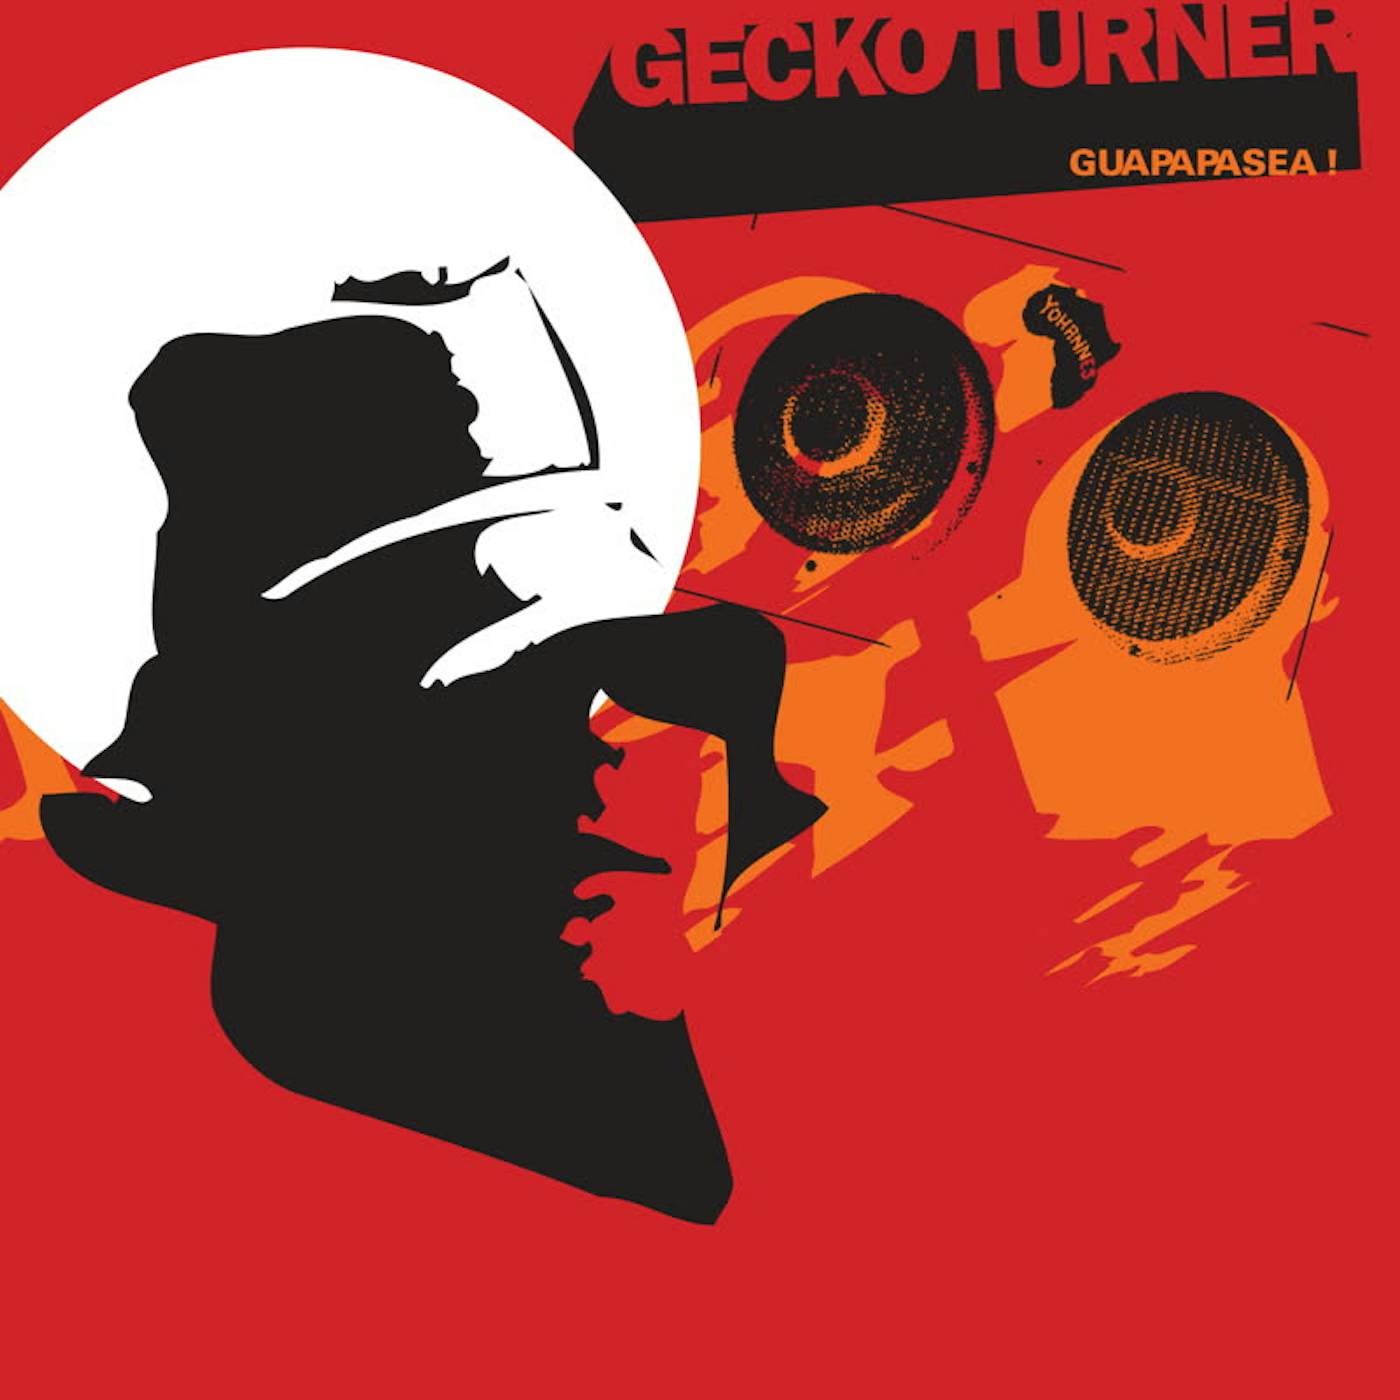 Gecko Turner LP - Guapapasea! (Vinyl)